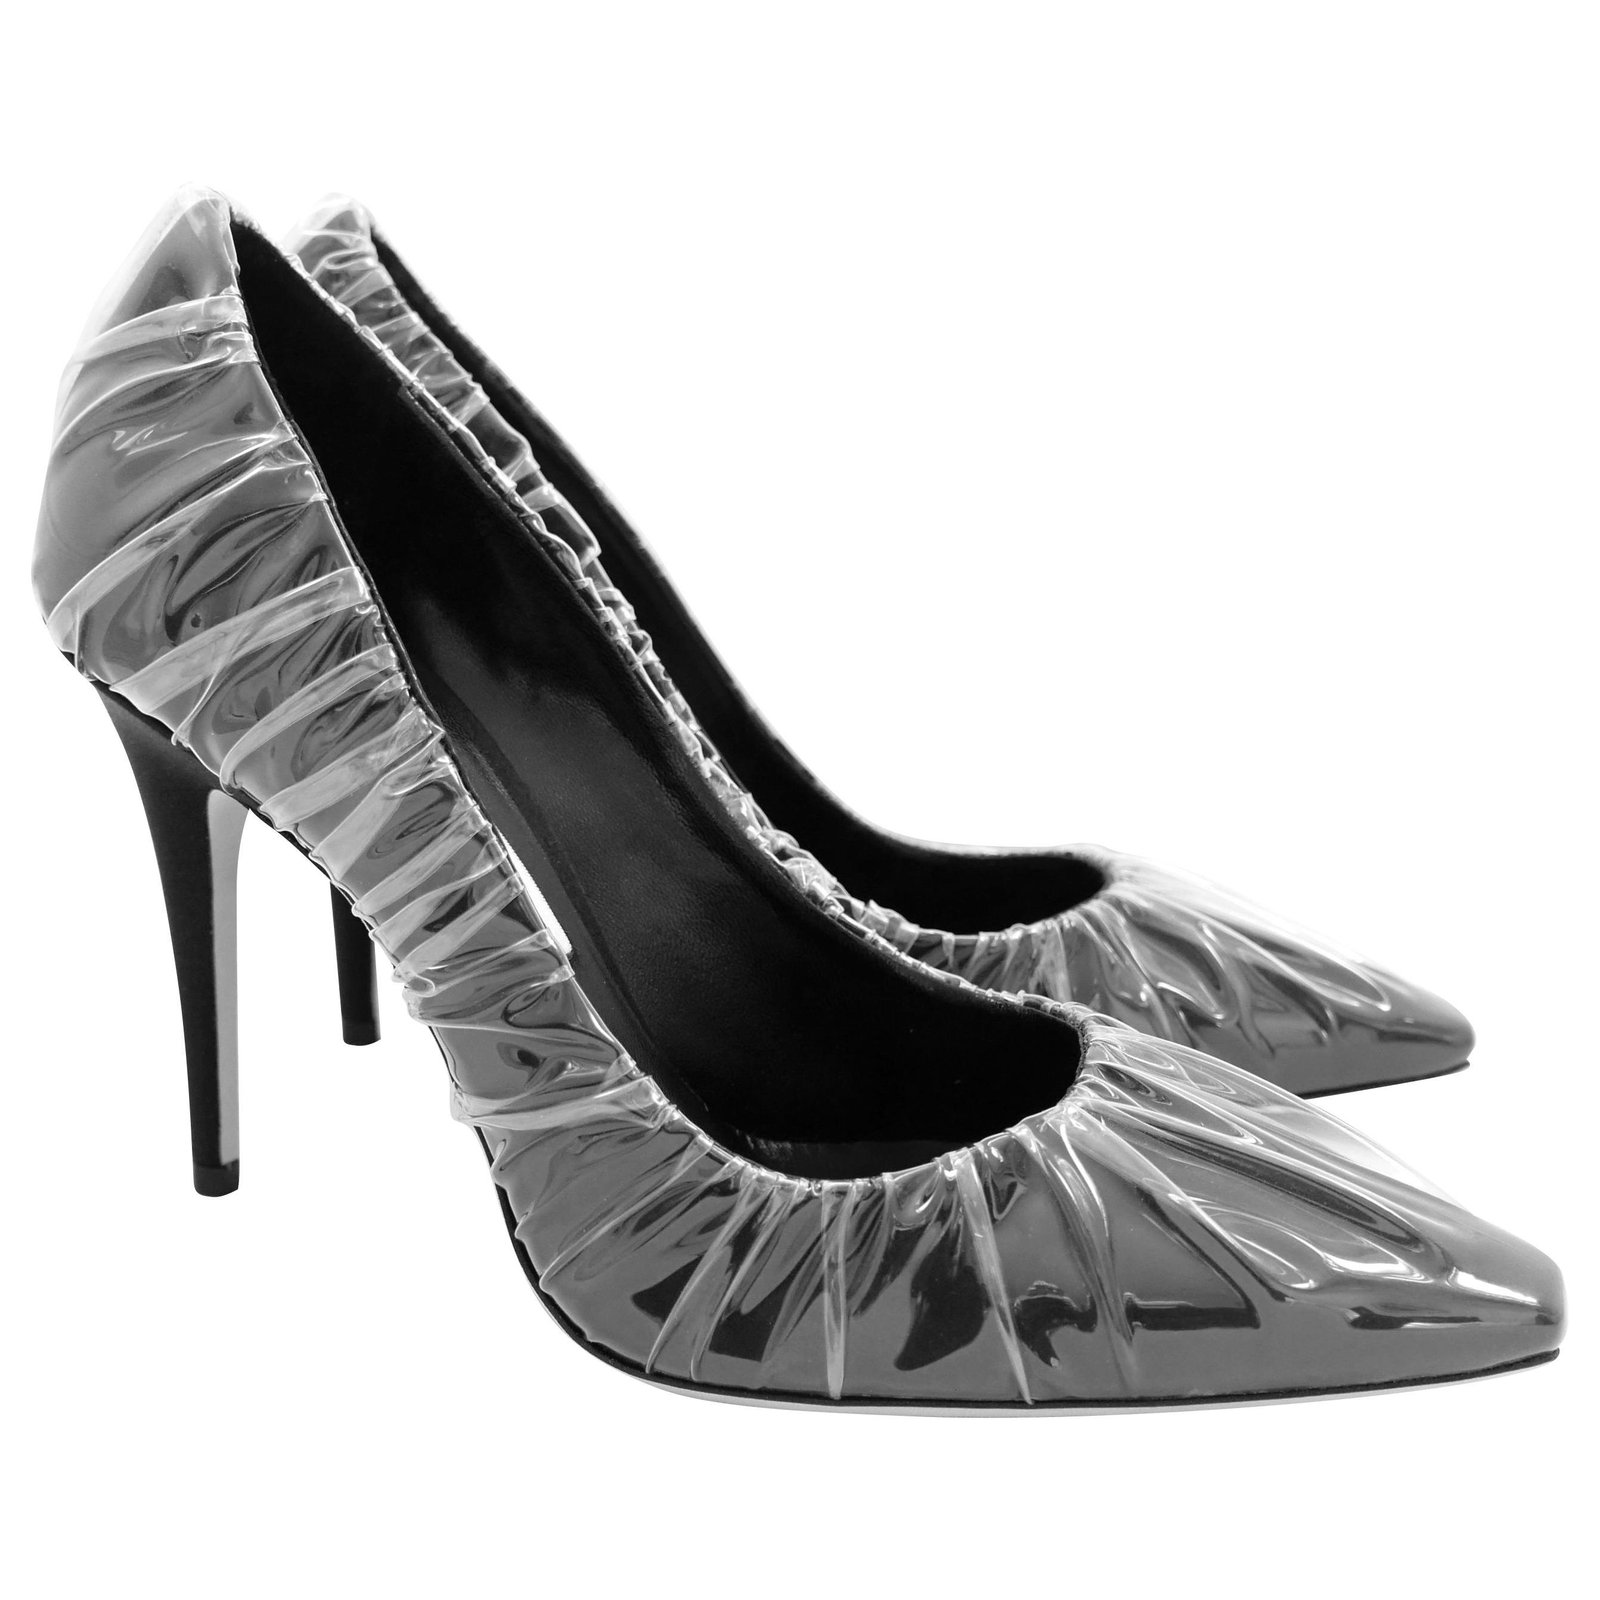 Jimmy Choo - Off-White Magie Heels | Heels, Stiletto heels, Leather heels